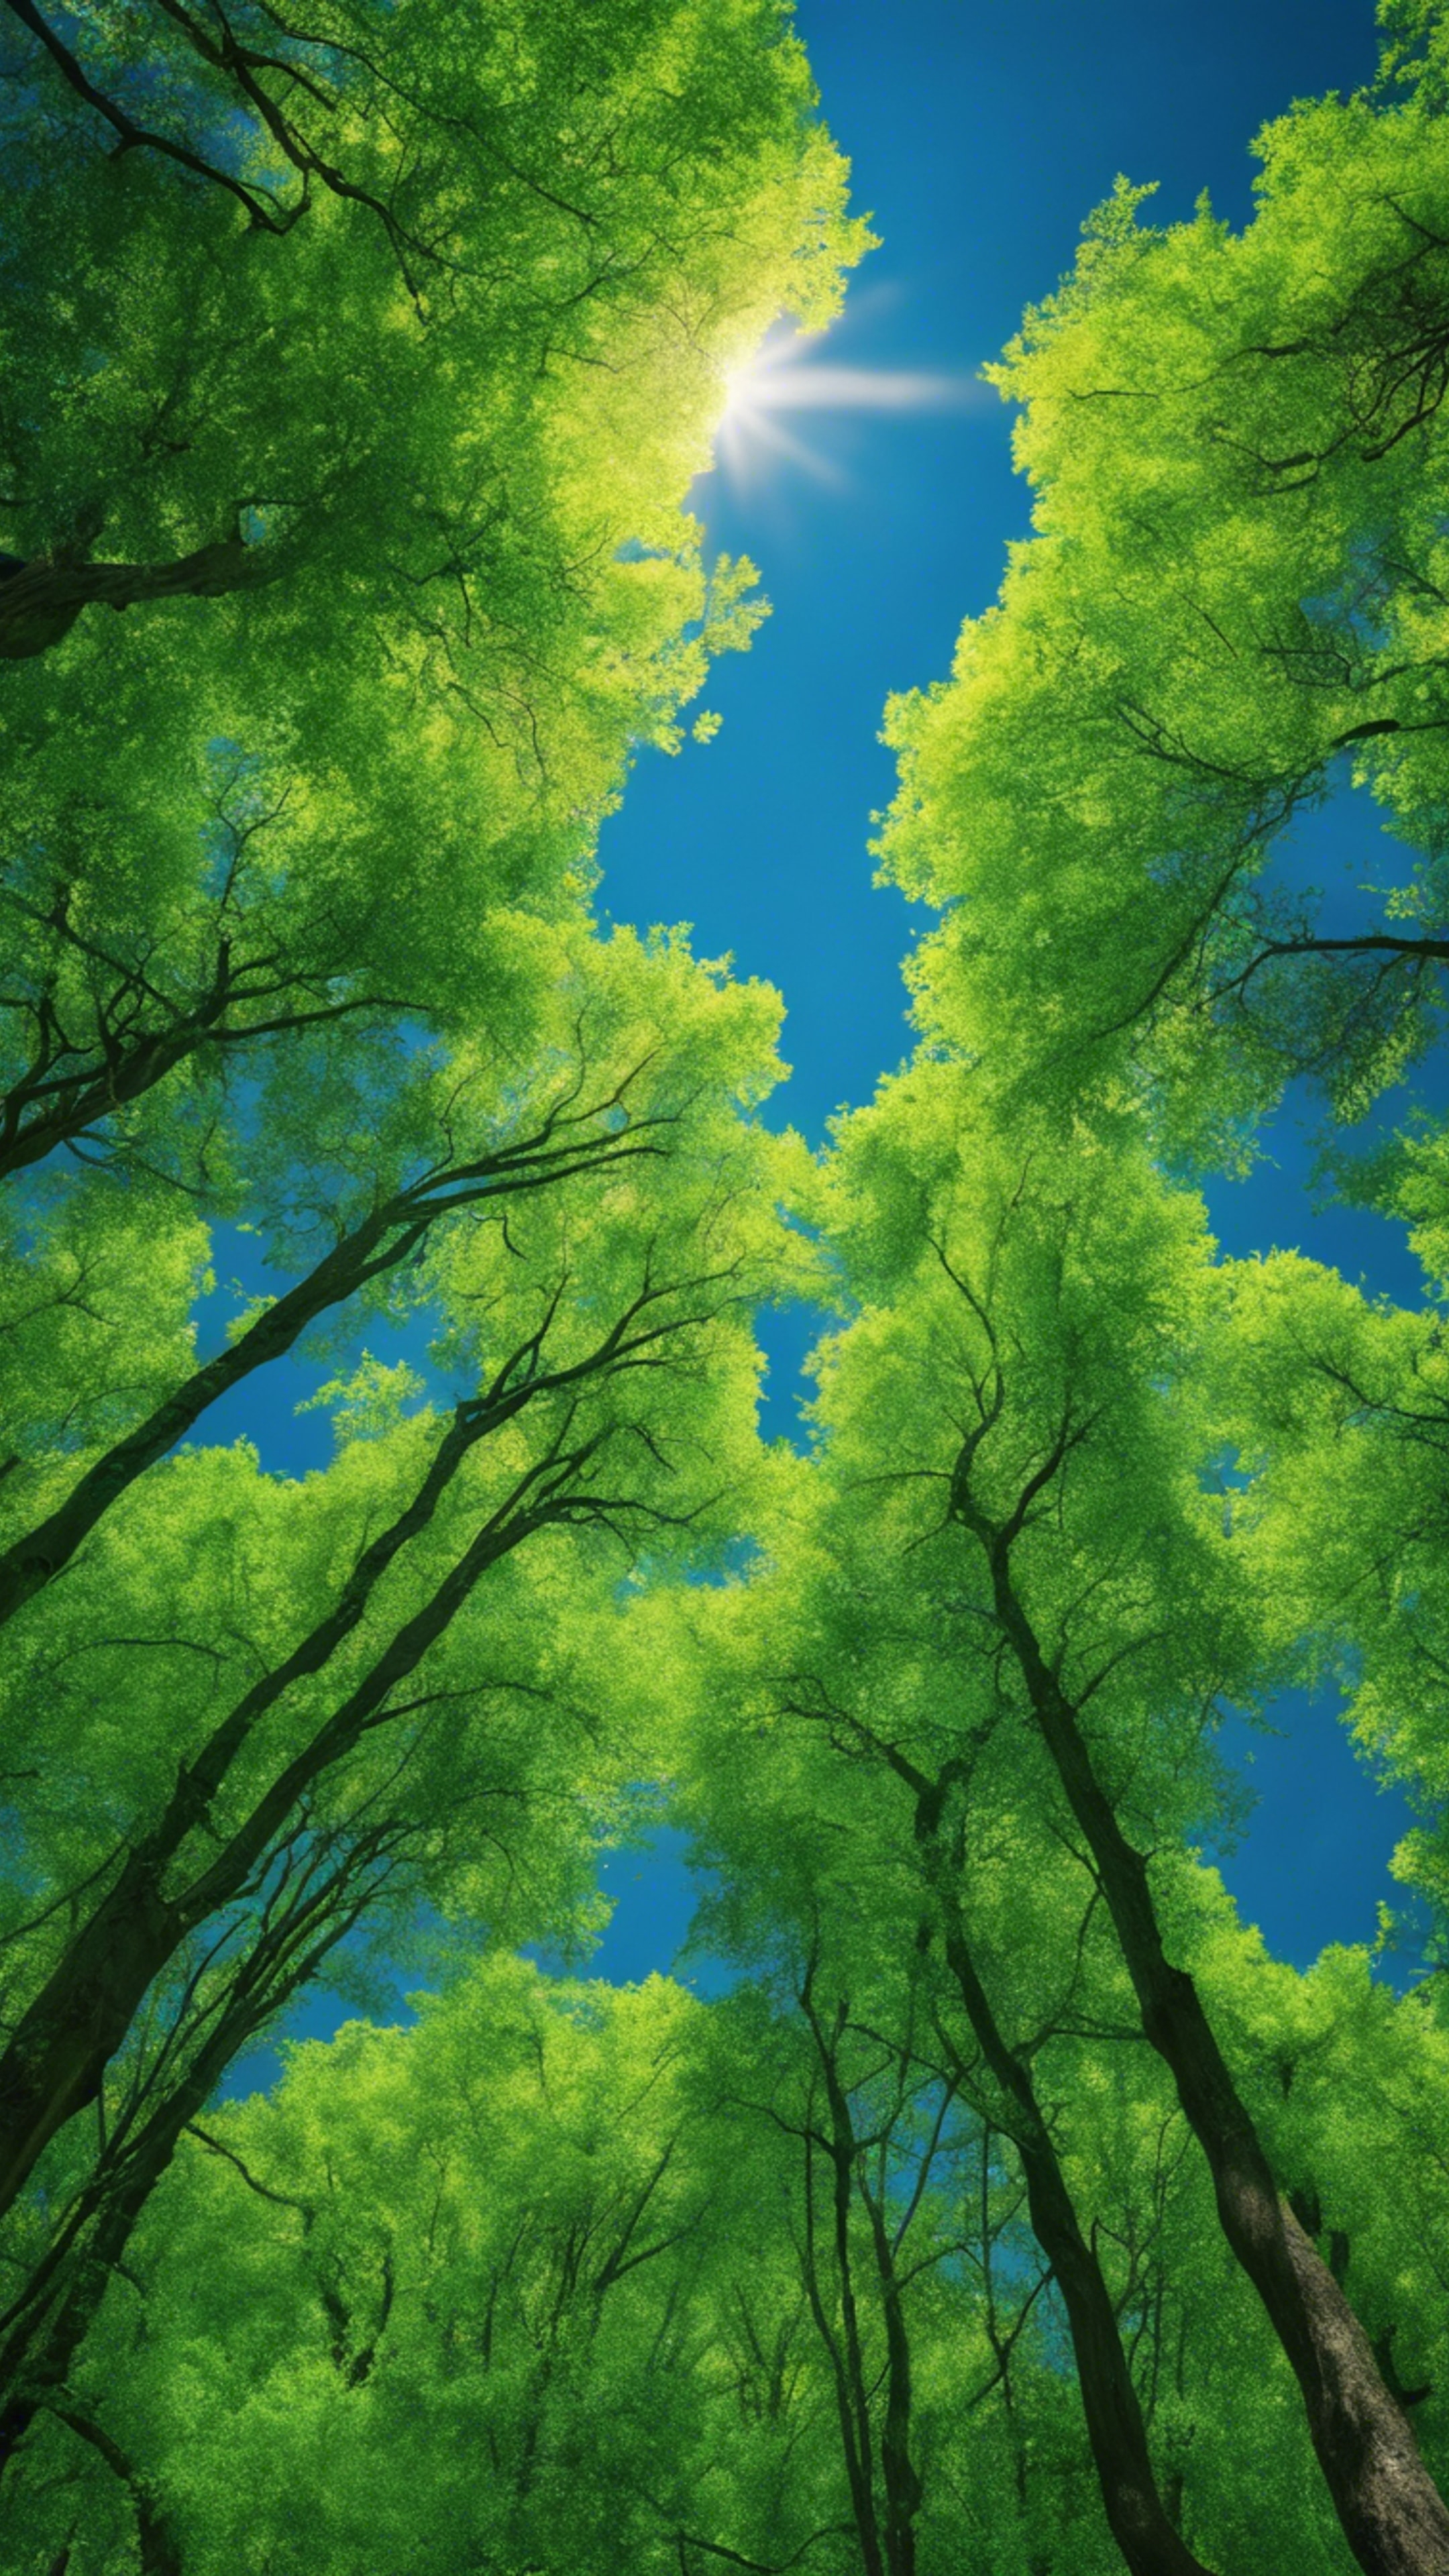 A vibrant green forest under a deep blue sky. Tapeta[dfb81149561043a7a18e]